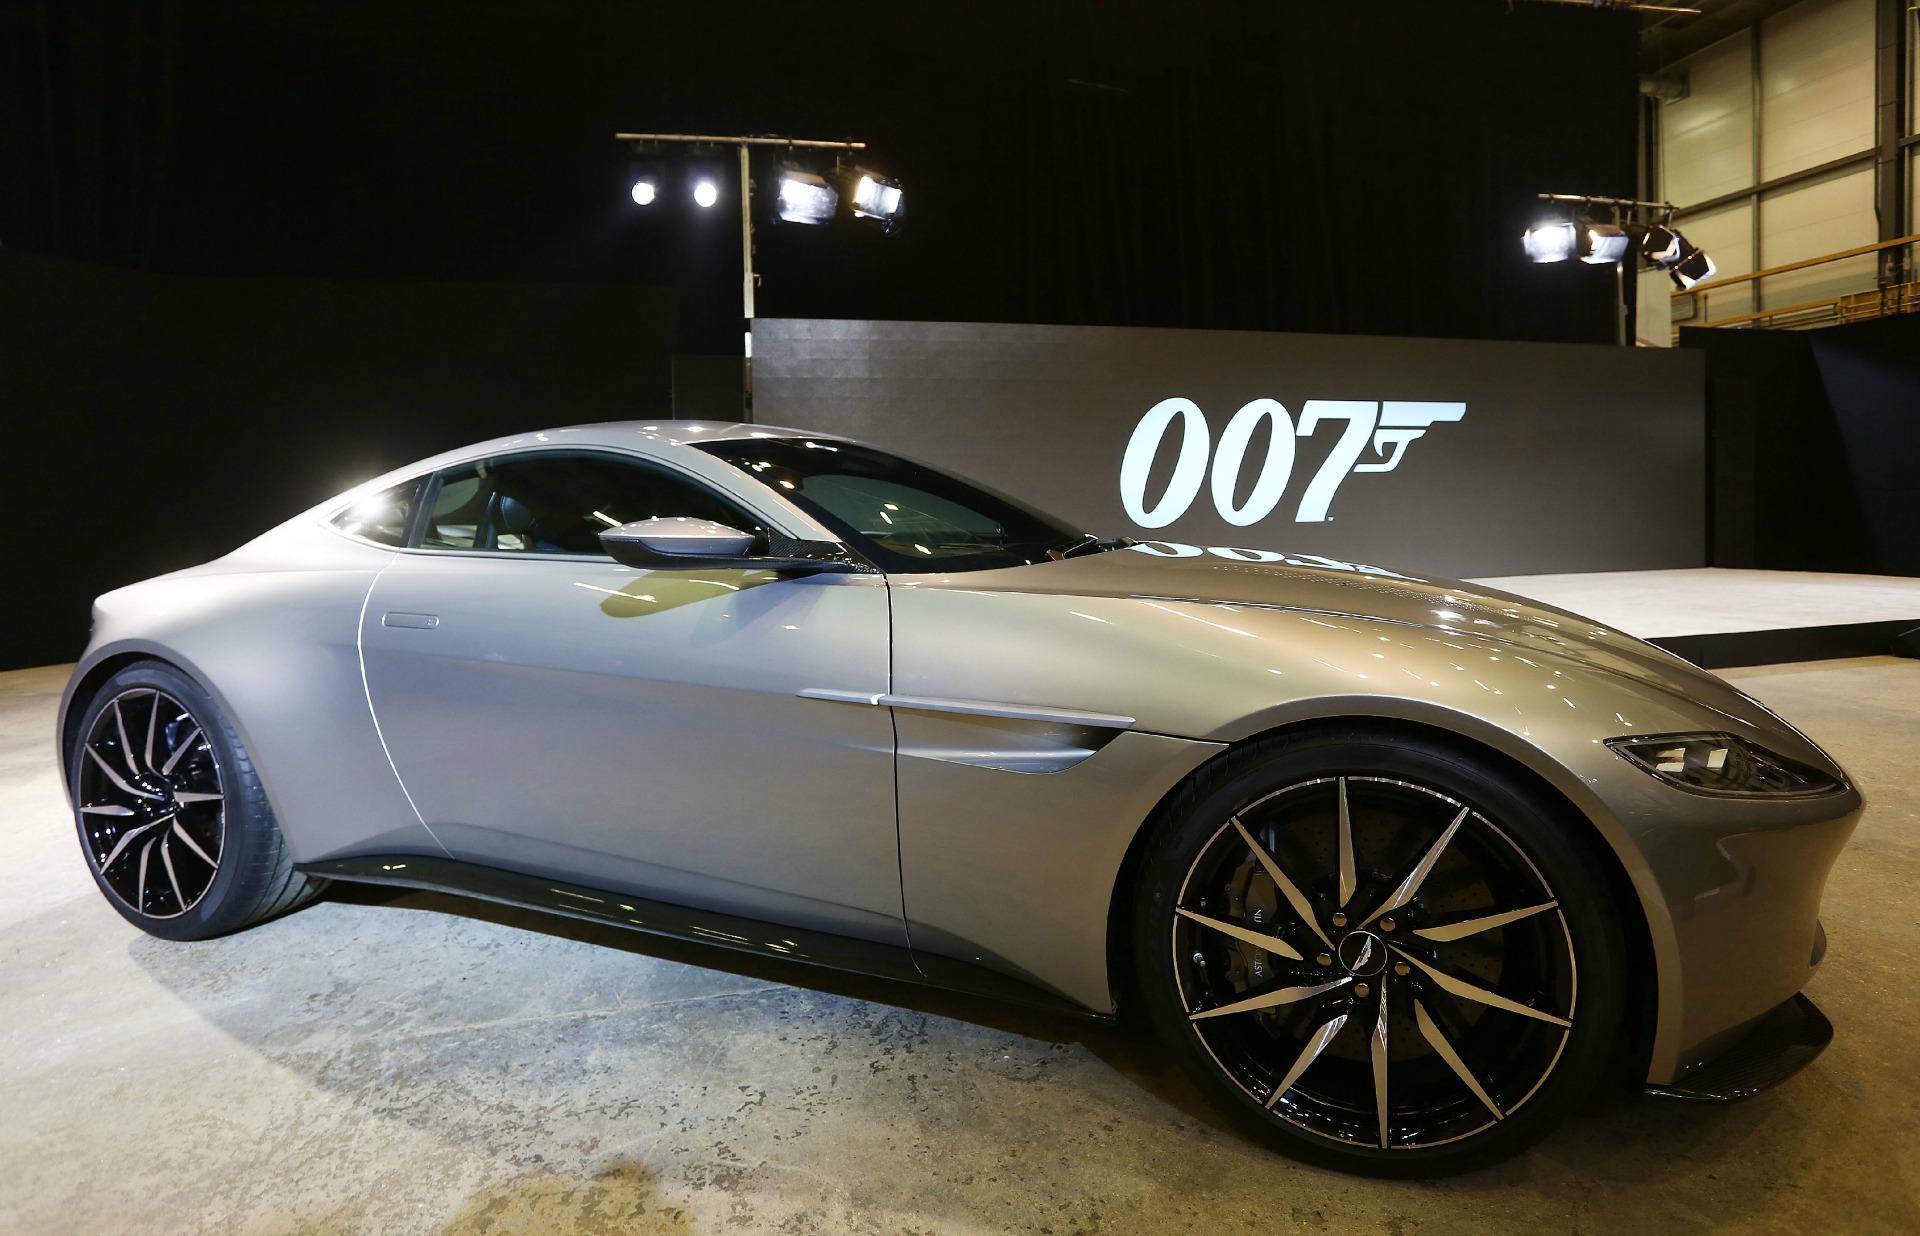 Aston Martin DB10 James Bond - Spectre